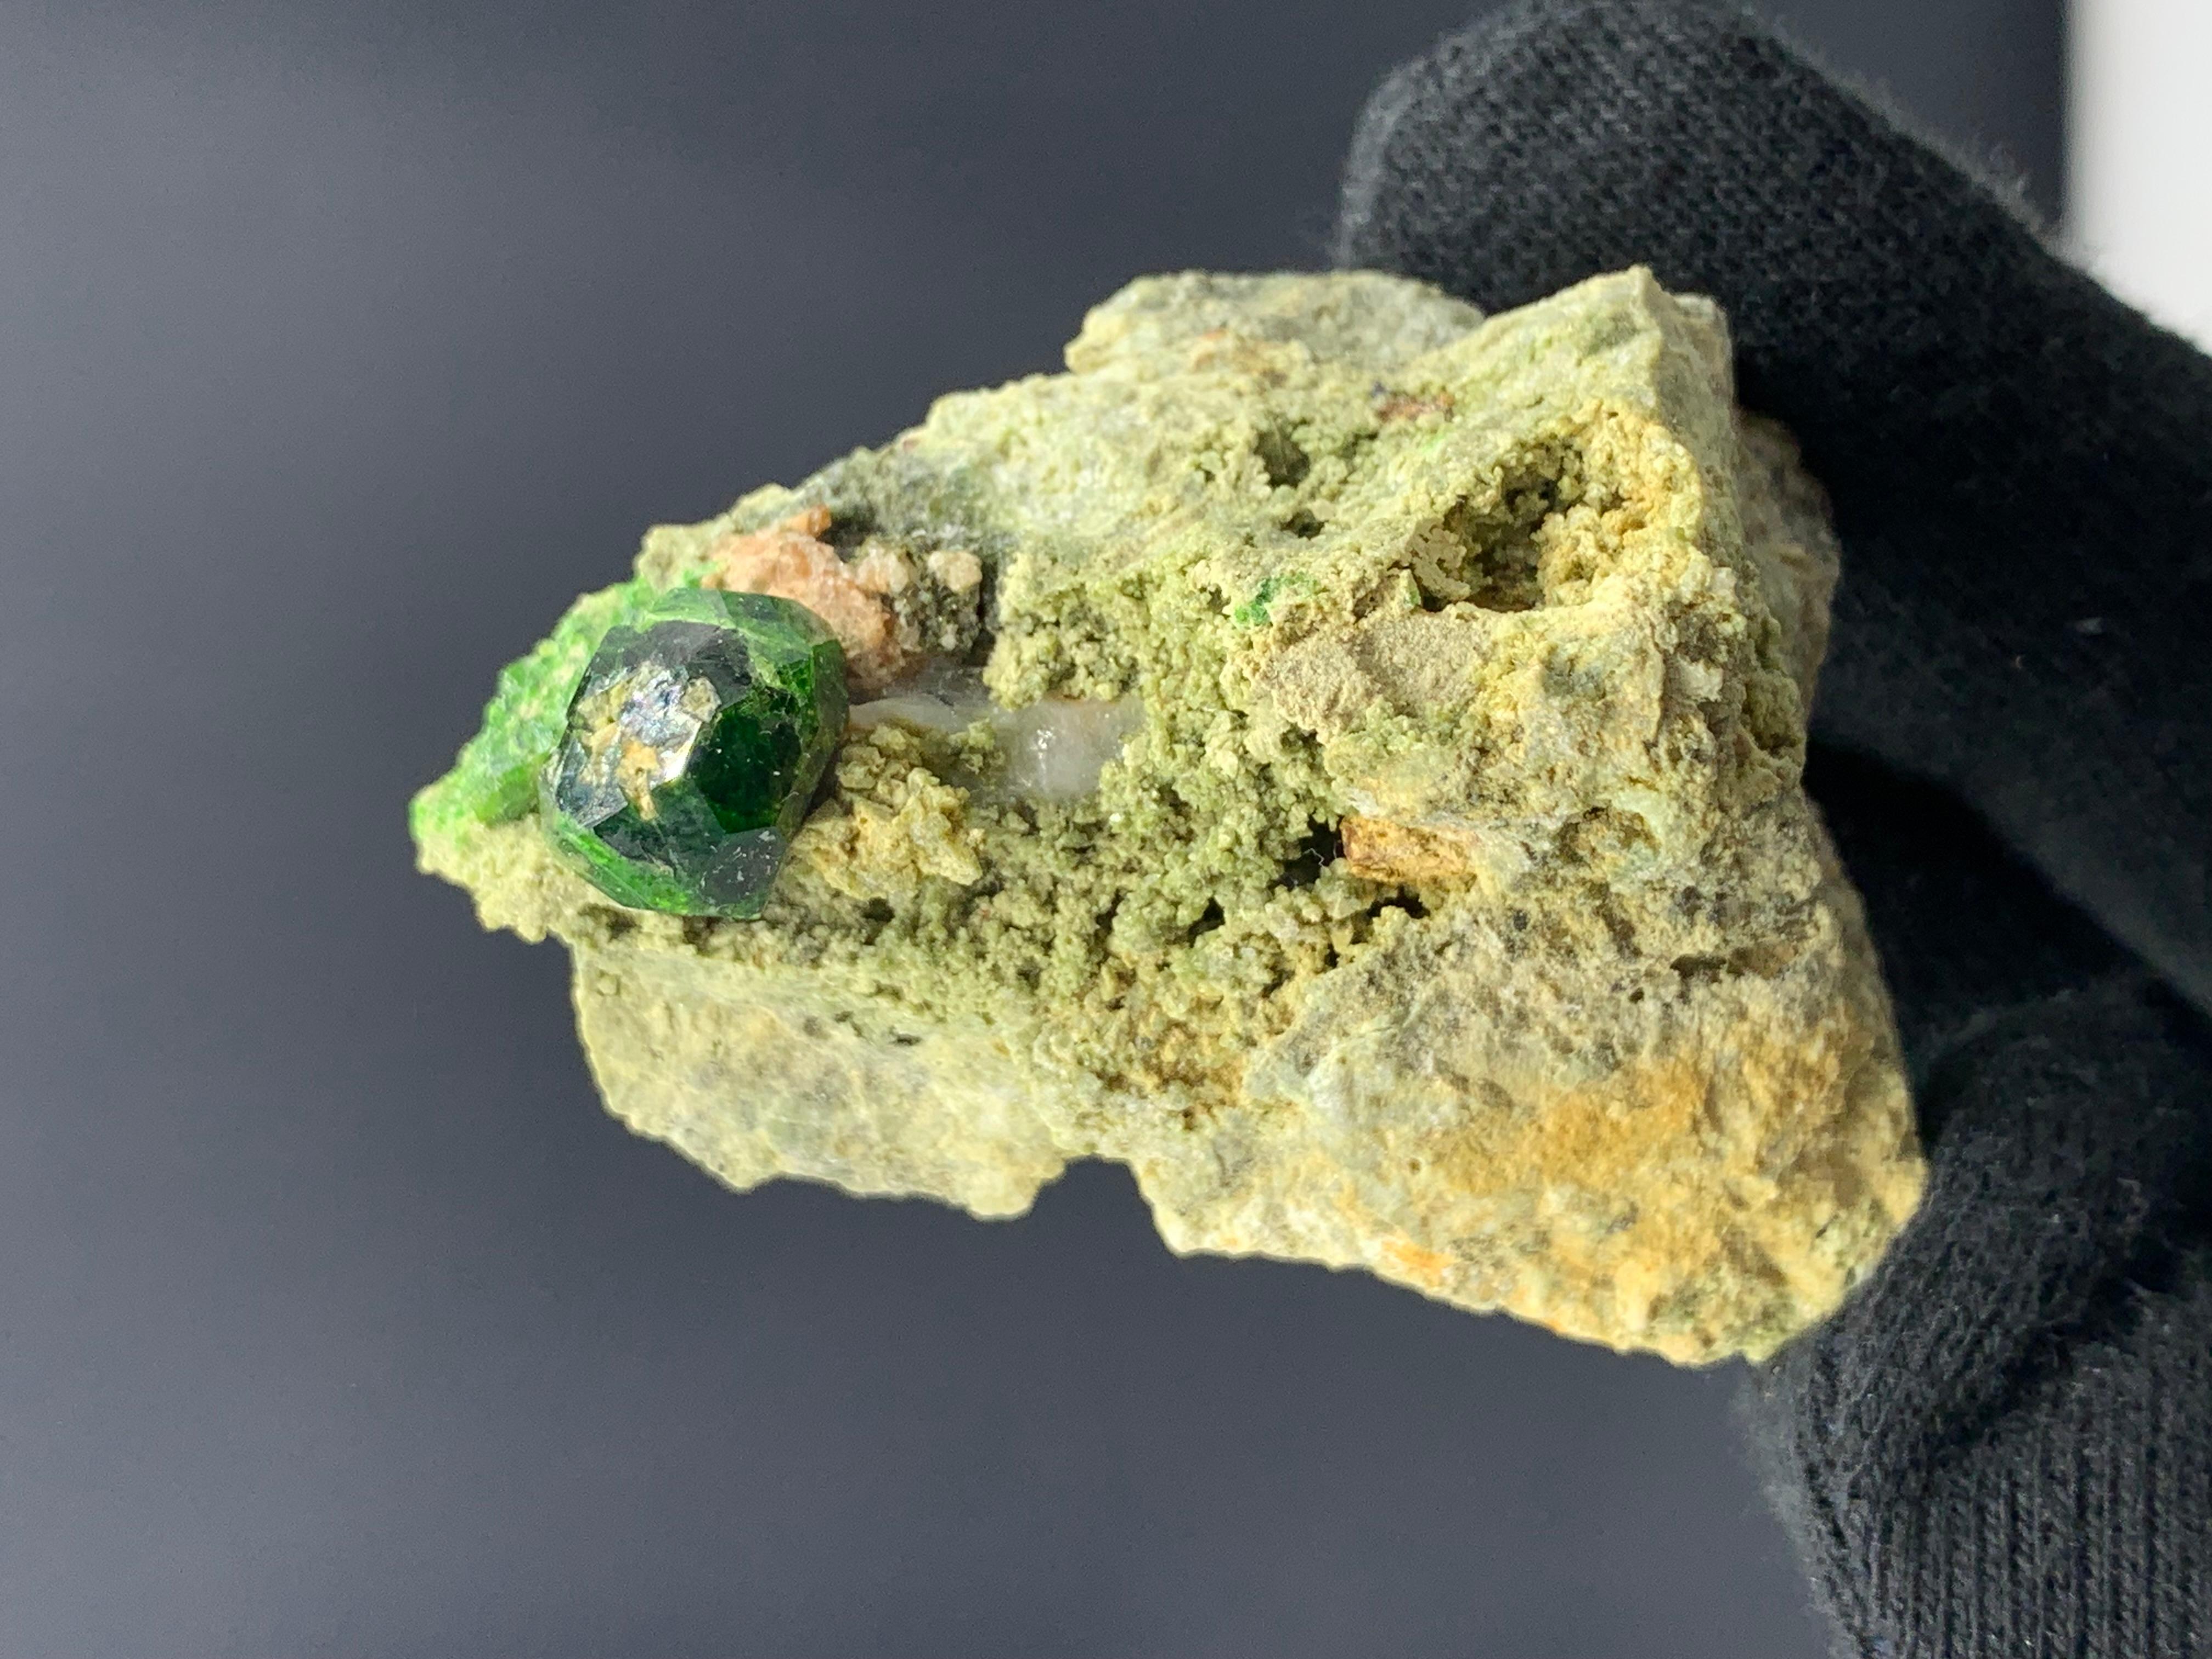 41.40 Gram Pretty Demantoid Garnet Specimen From Balochistan, Pakistan 

Weight: 41.40 Gram
Dimension: 5.3 x 3.8 x 2.4 Cm
Origin: Balochistan, Pakistan

Demantoid is the green gemstone variety of the mineral andradite, a member of the garnet group